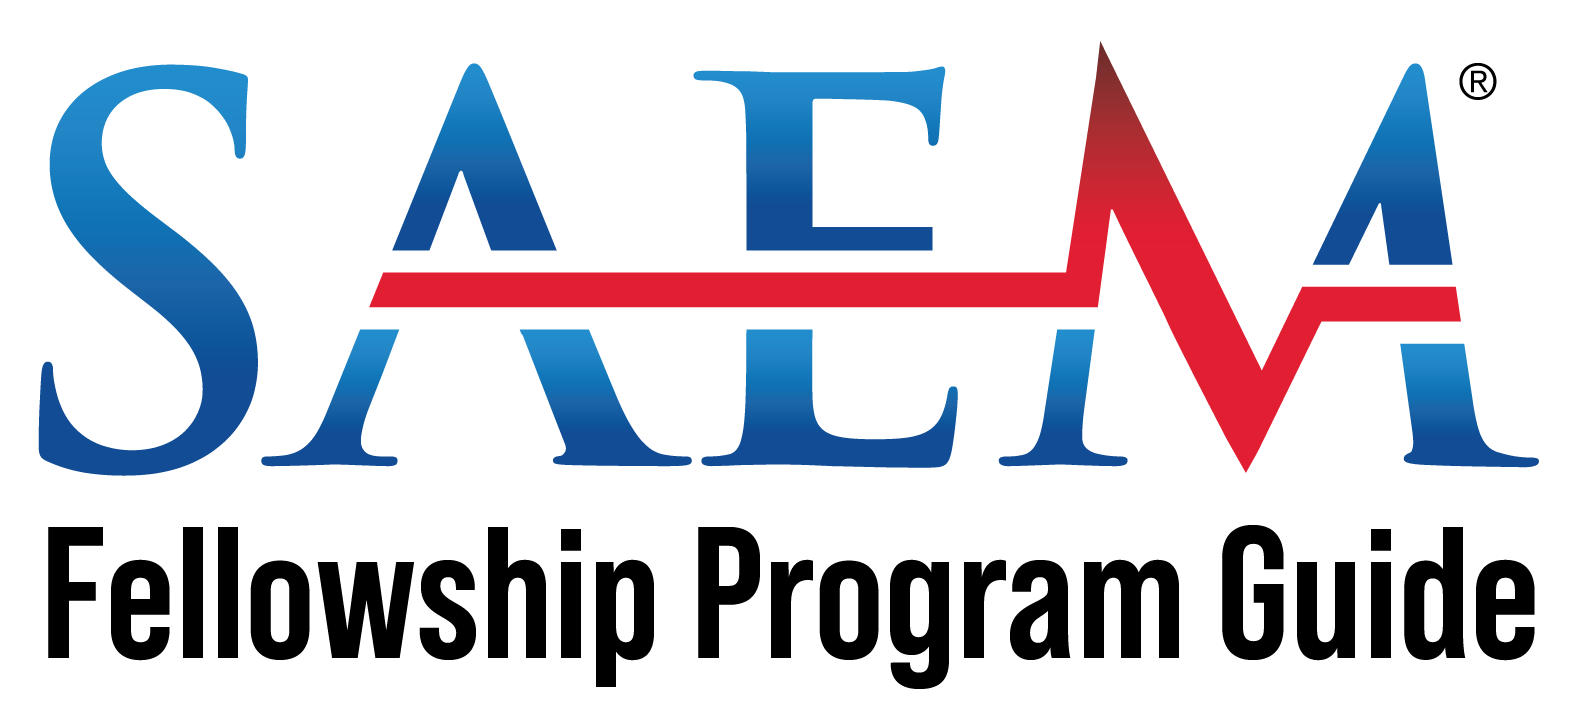 SAEM Fellowship Program Guide logo